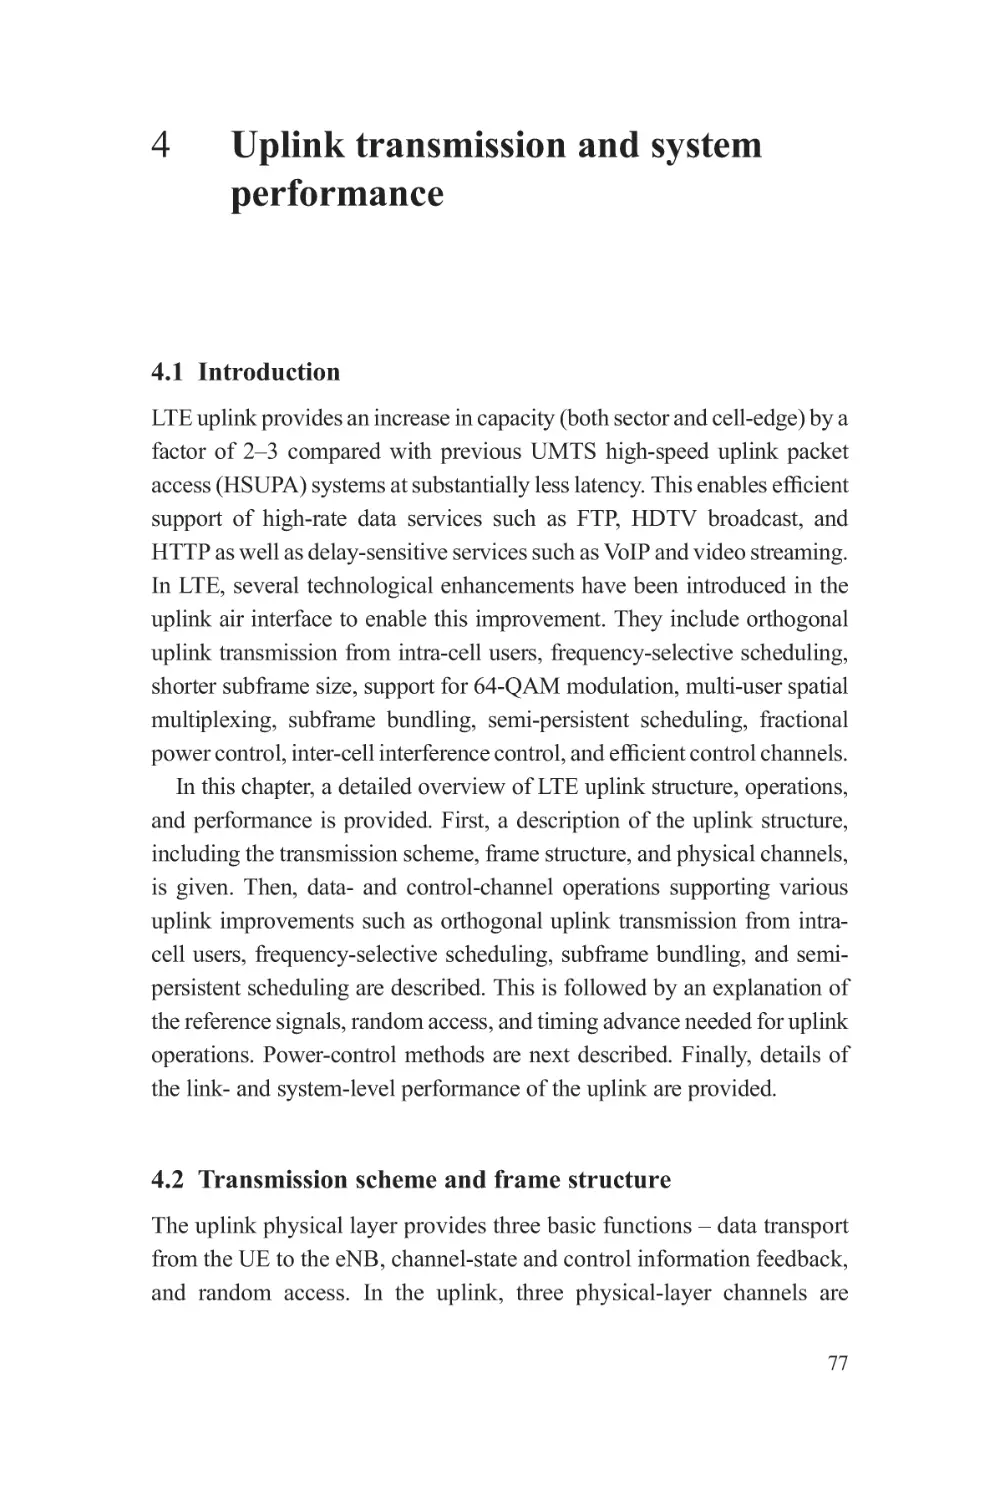 4 Uplink transmission and system performance
4.1 Introduction
4.2 Transmission scheme and frame structure